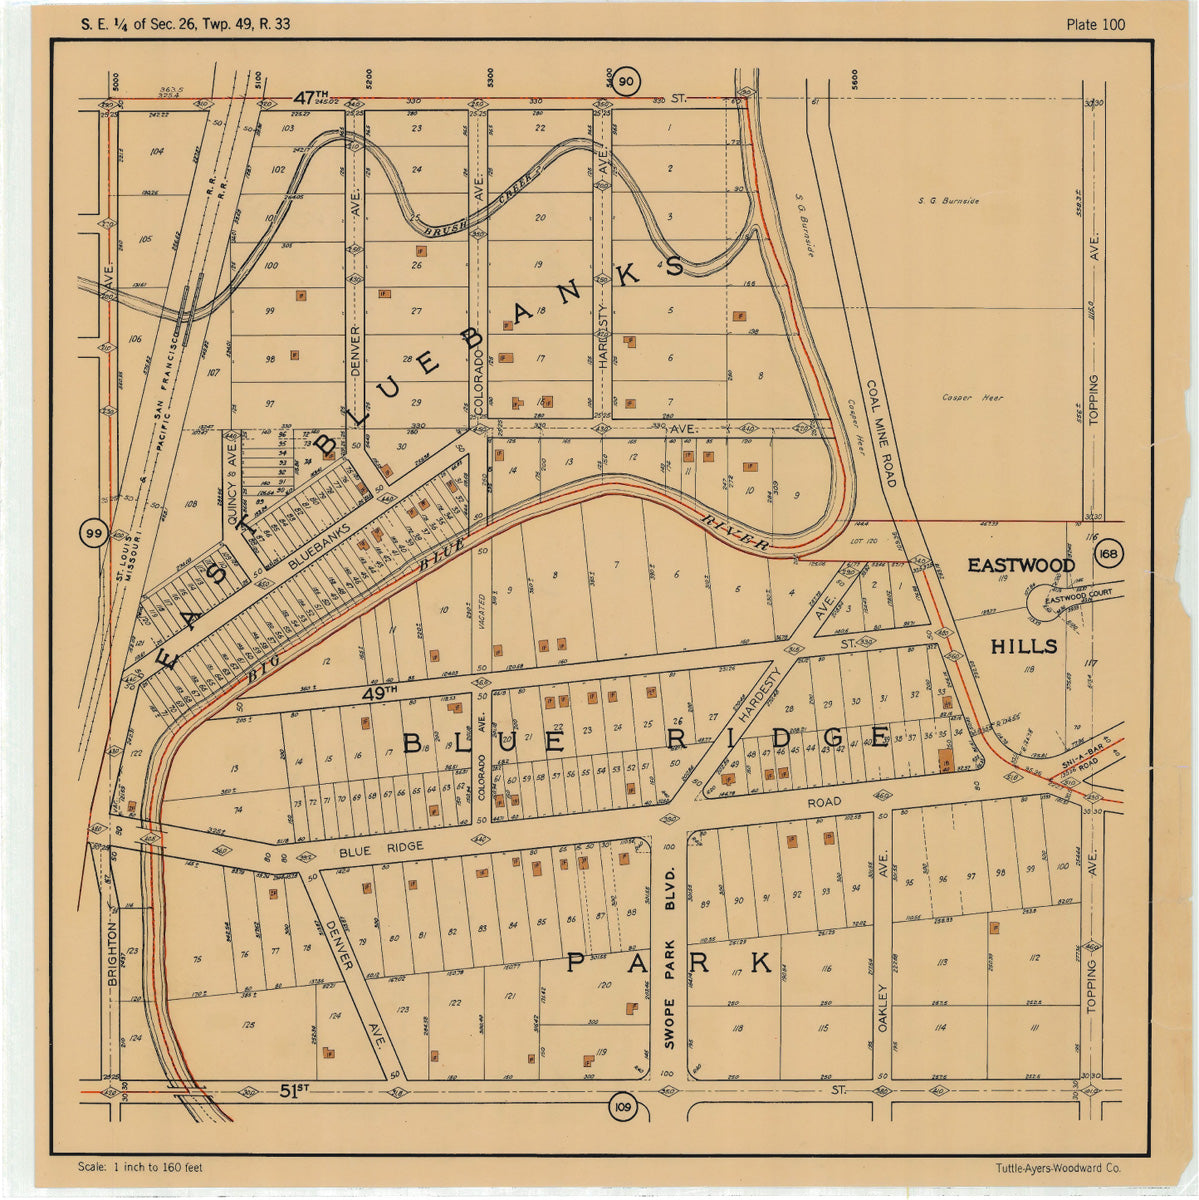 Kansas City 1925 Neighborhood Map - Plate #100 47th-51st Brighton-Topping